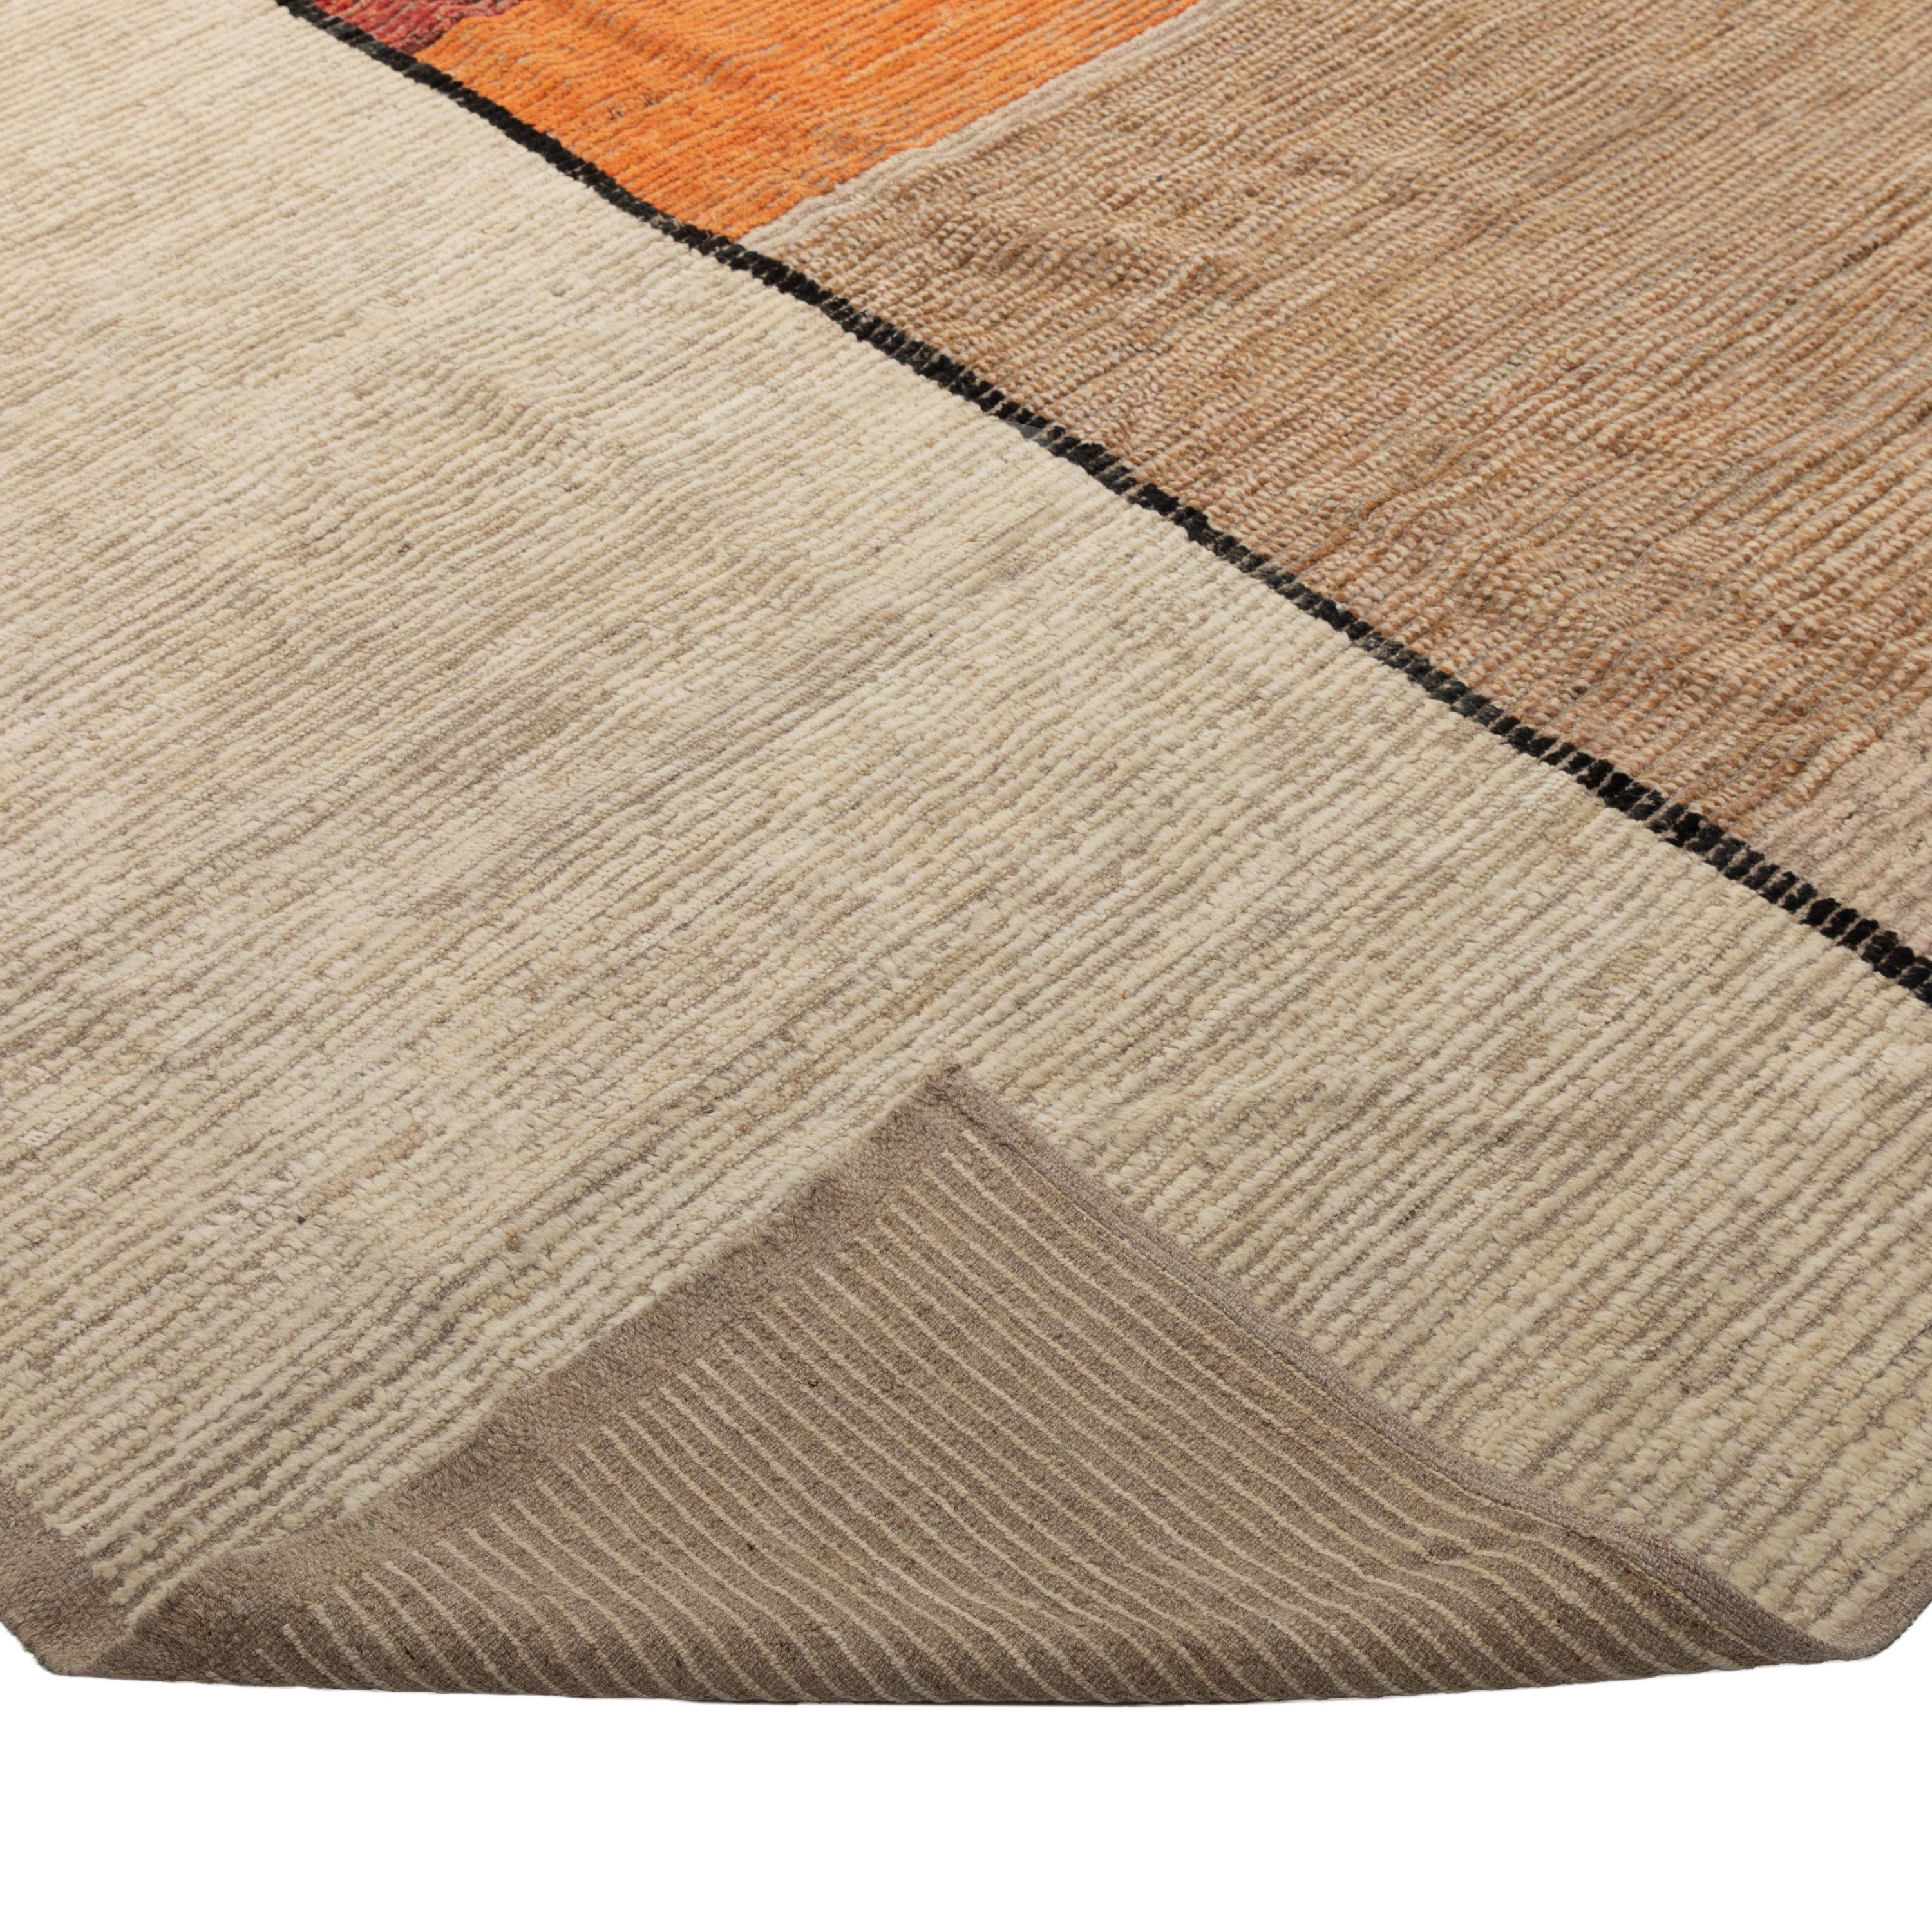 Afghan abc carpet Orange Zameen Transitional Wool Rug - 16' x 14'2